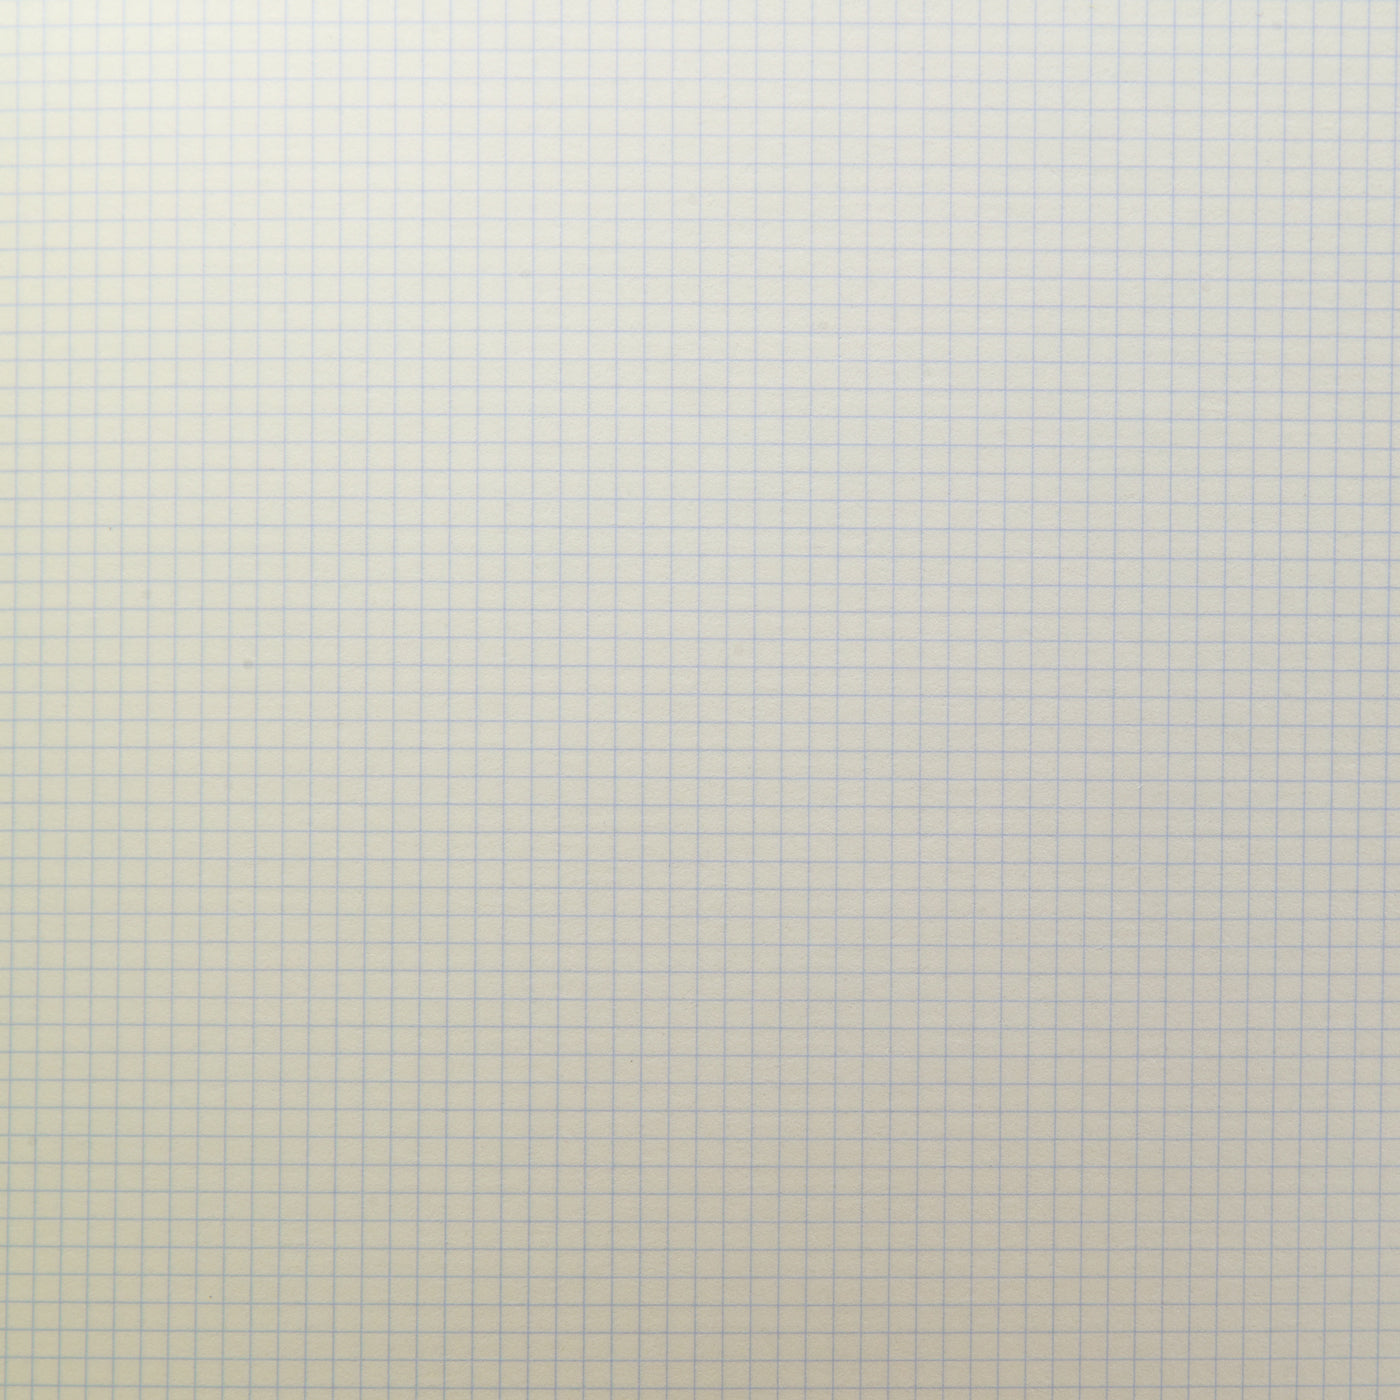 Kleid 2mm Grid Notes A5- Grey